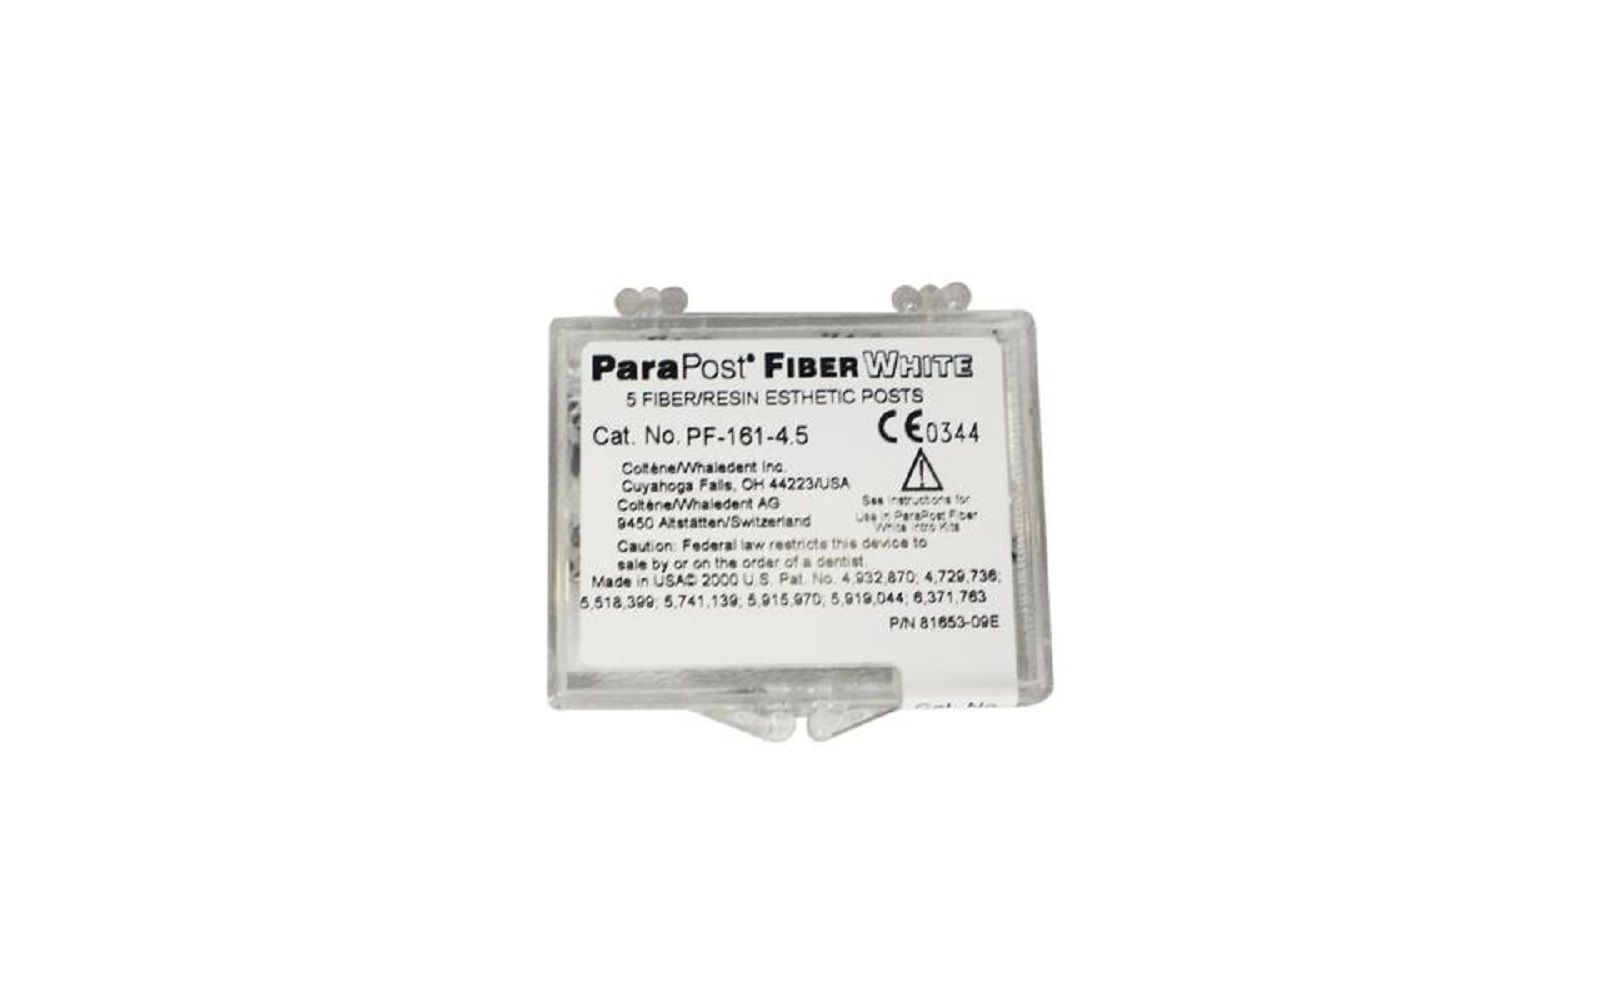 Parapost® fiber white esthetic posts system refills, 5/pkg - coltene